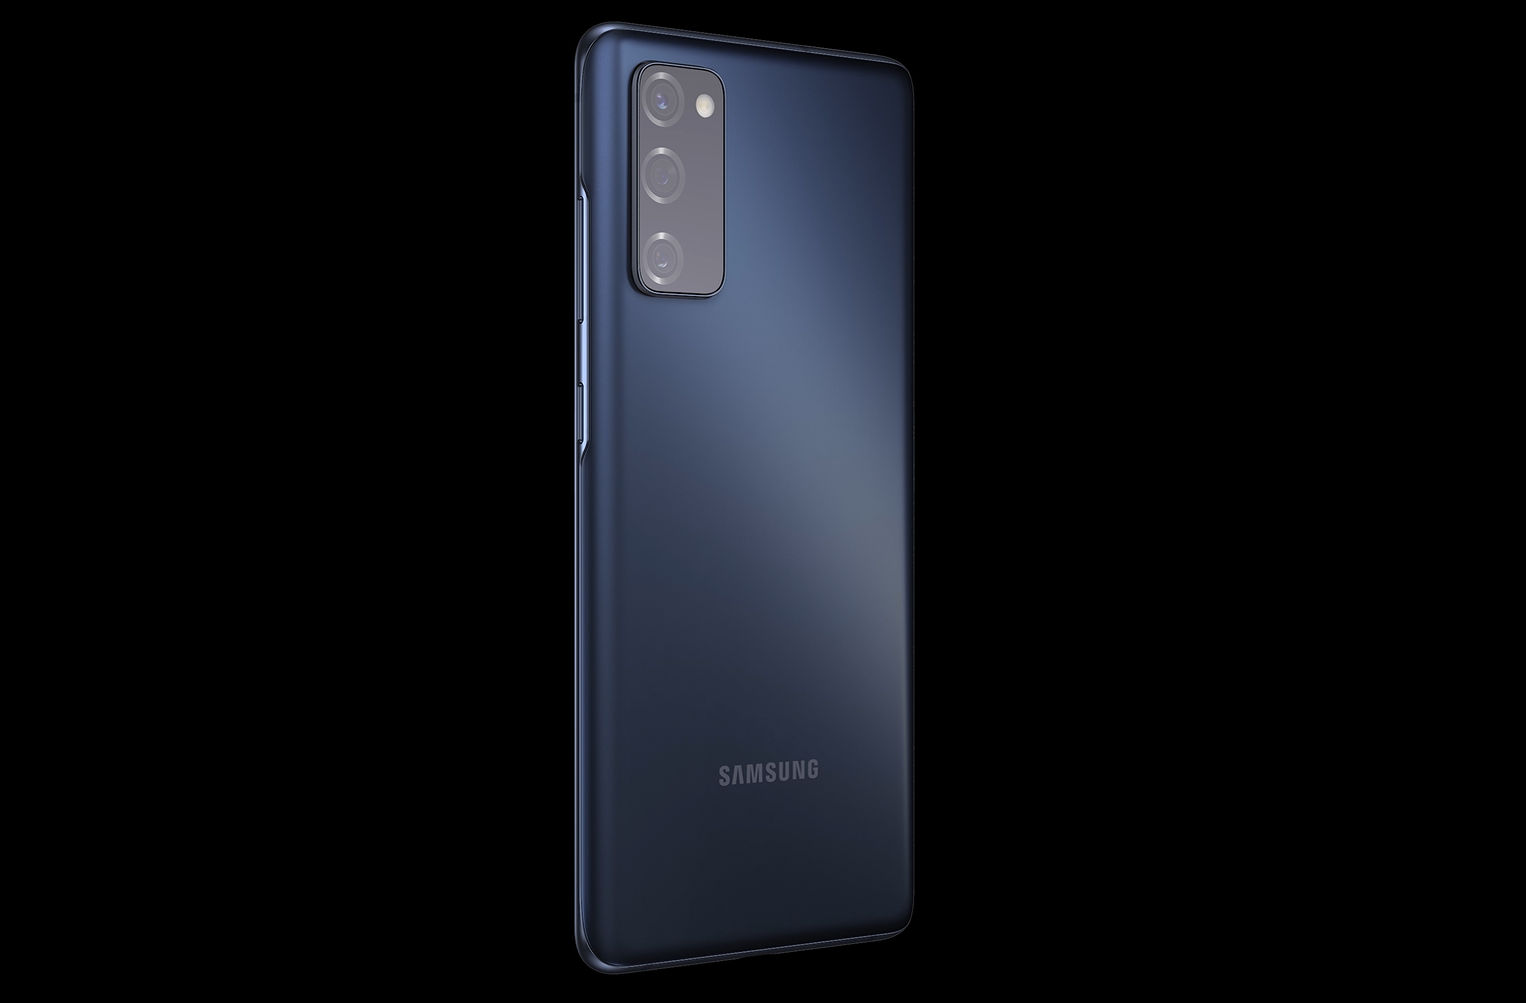 Samsung Galaxy S20 Fe 5G 128GB Factory Unlocked Cellphone, Blue